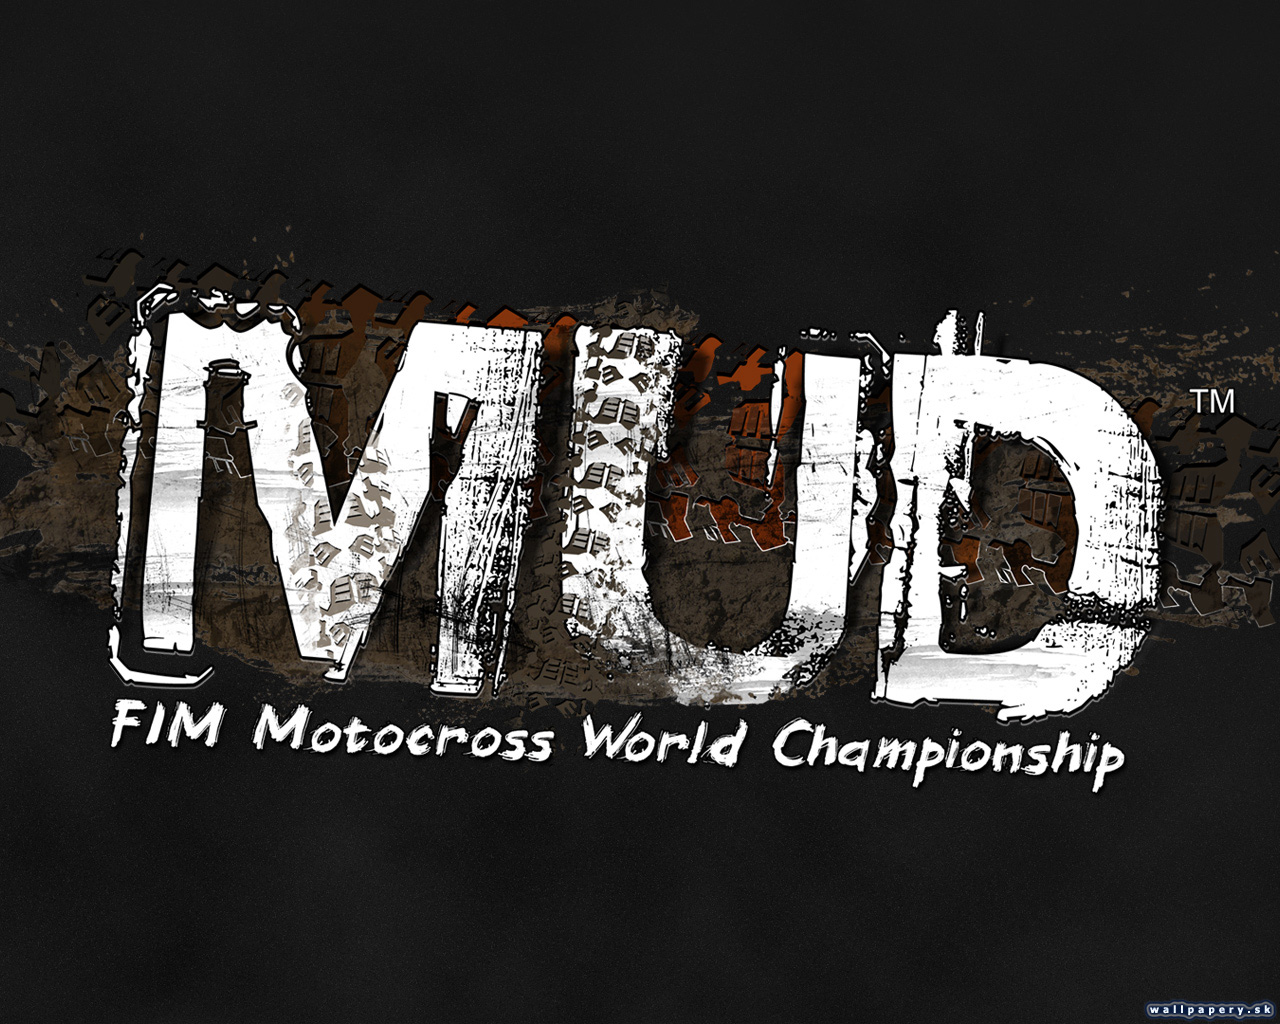 MUD - FIM Motocross World Championship - wallpaper 7